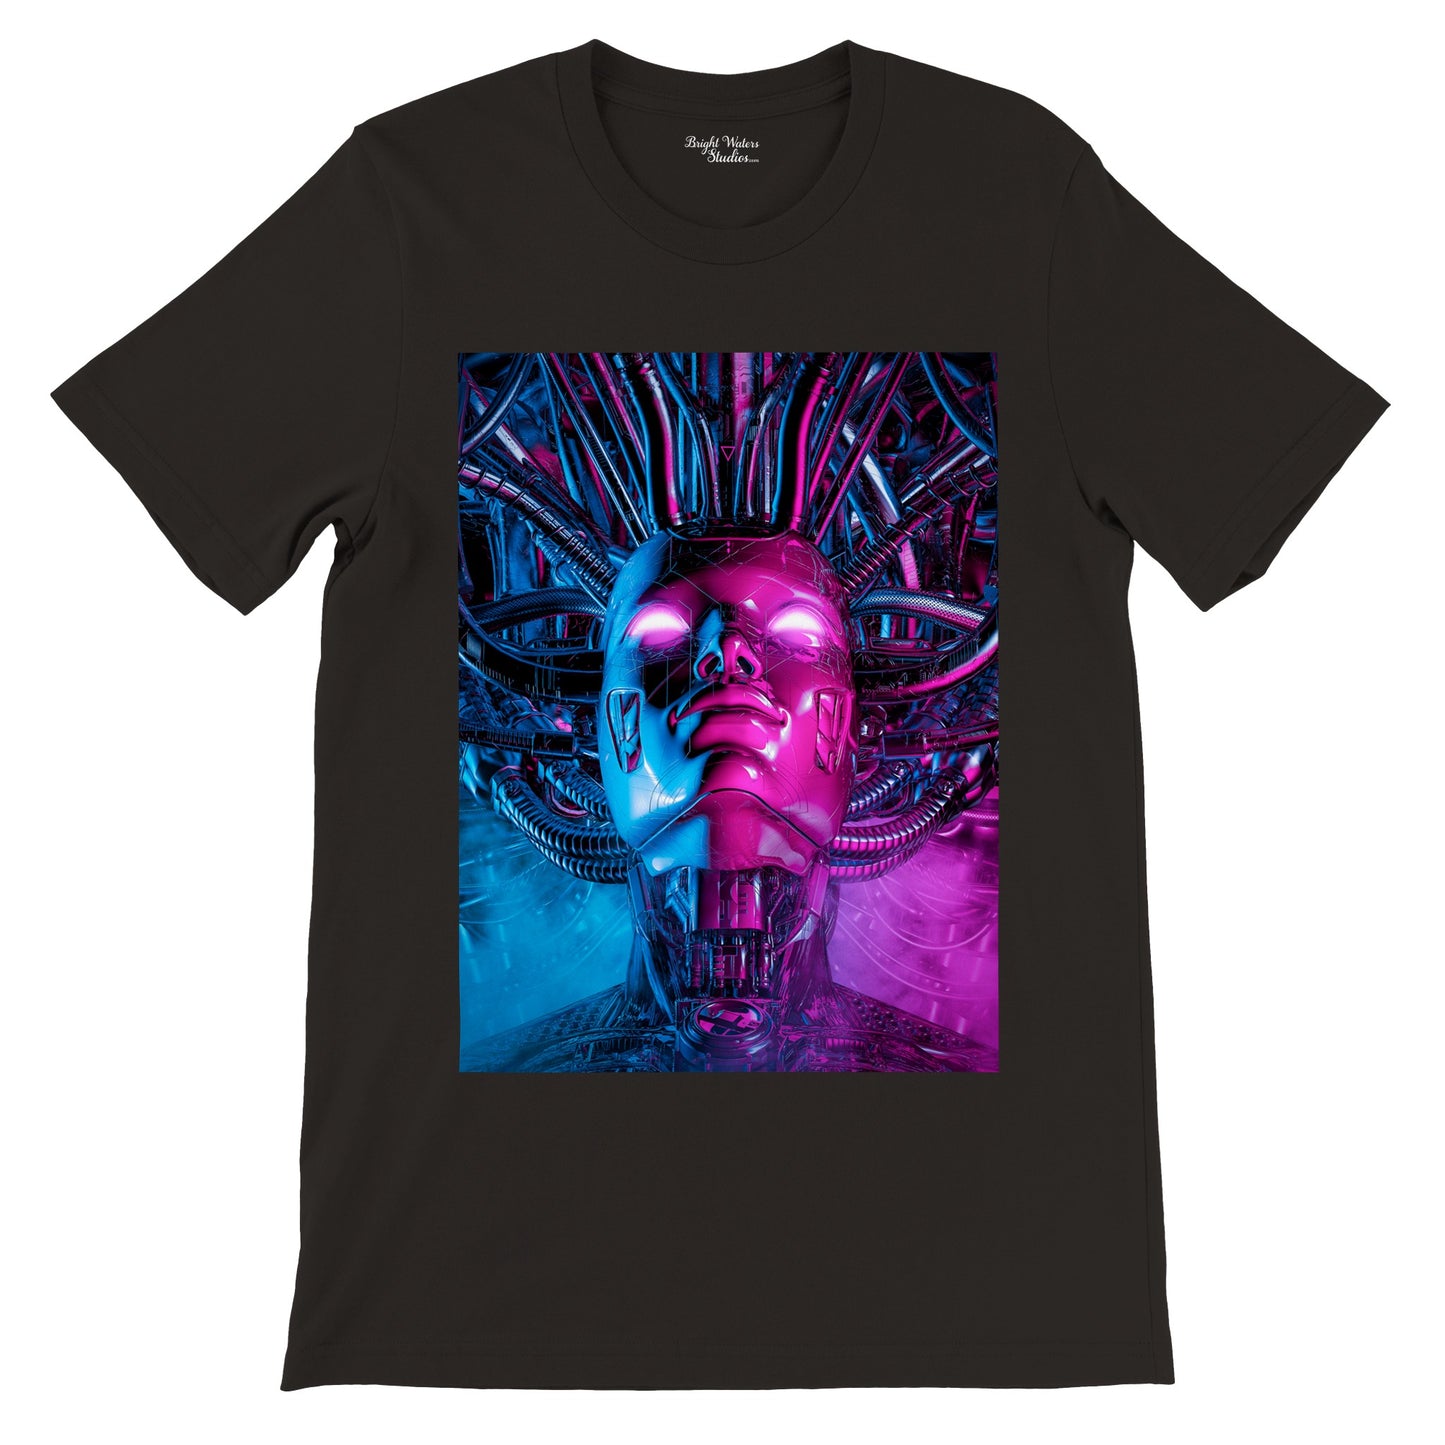 Cyborg T-shirt